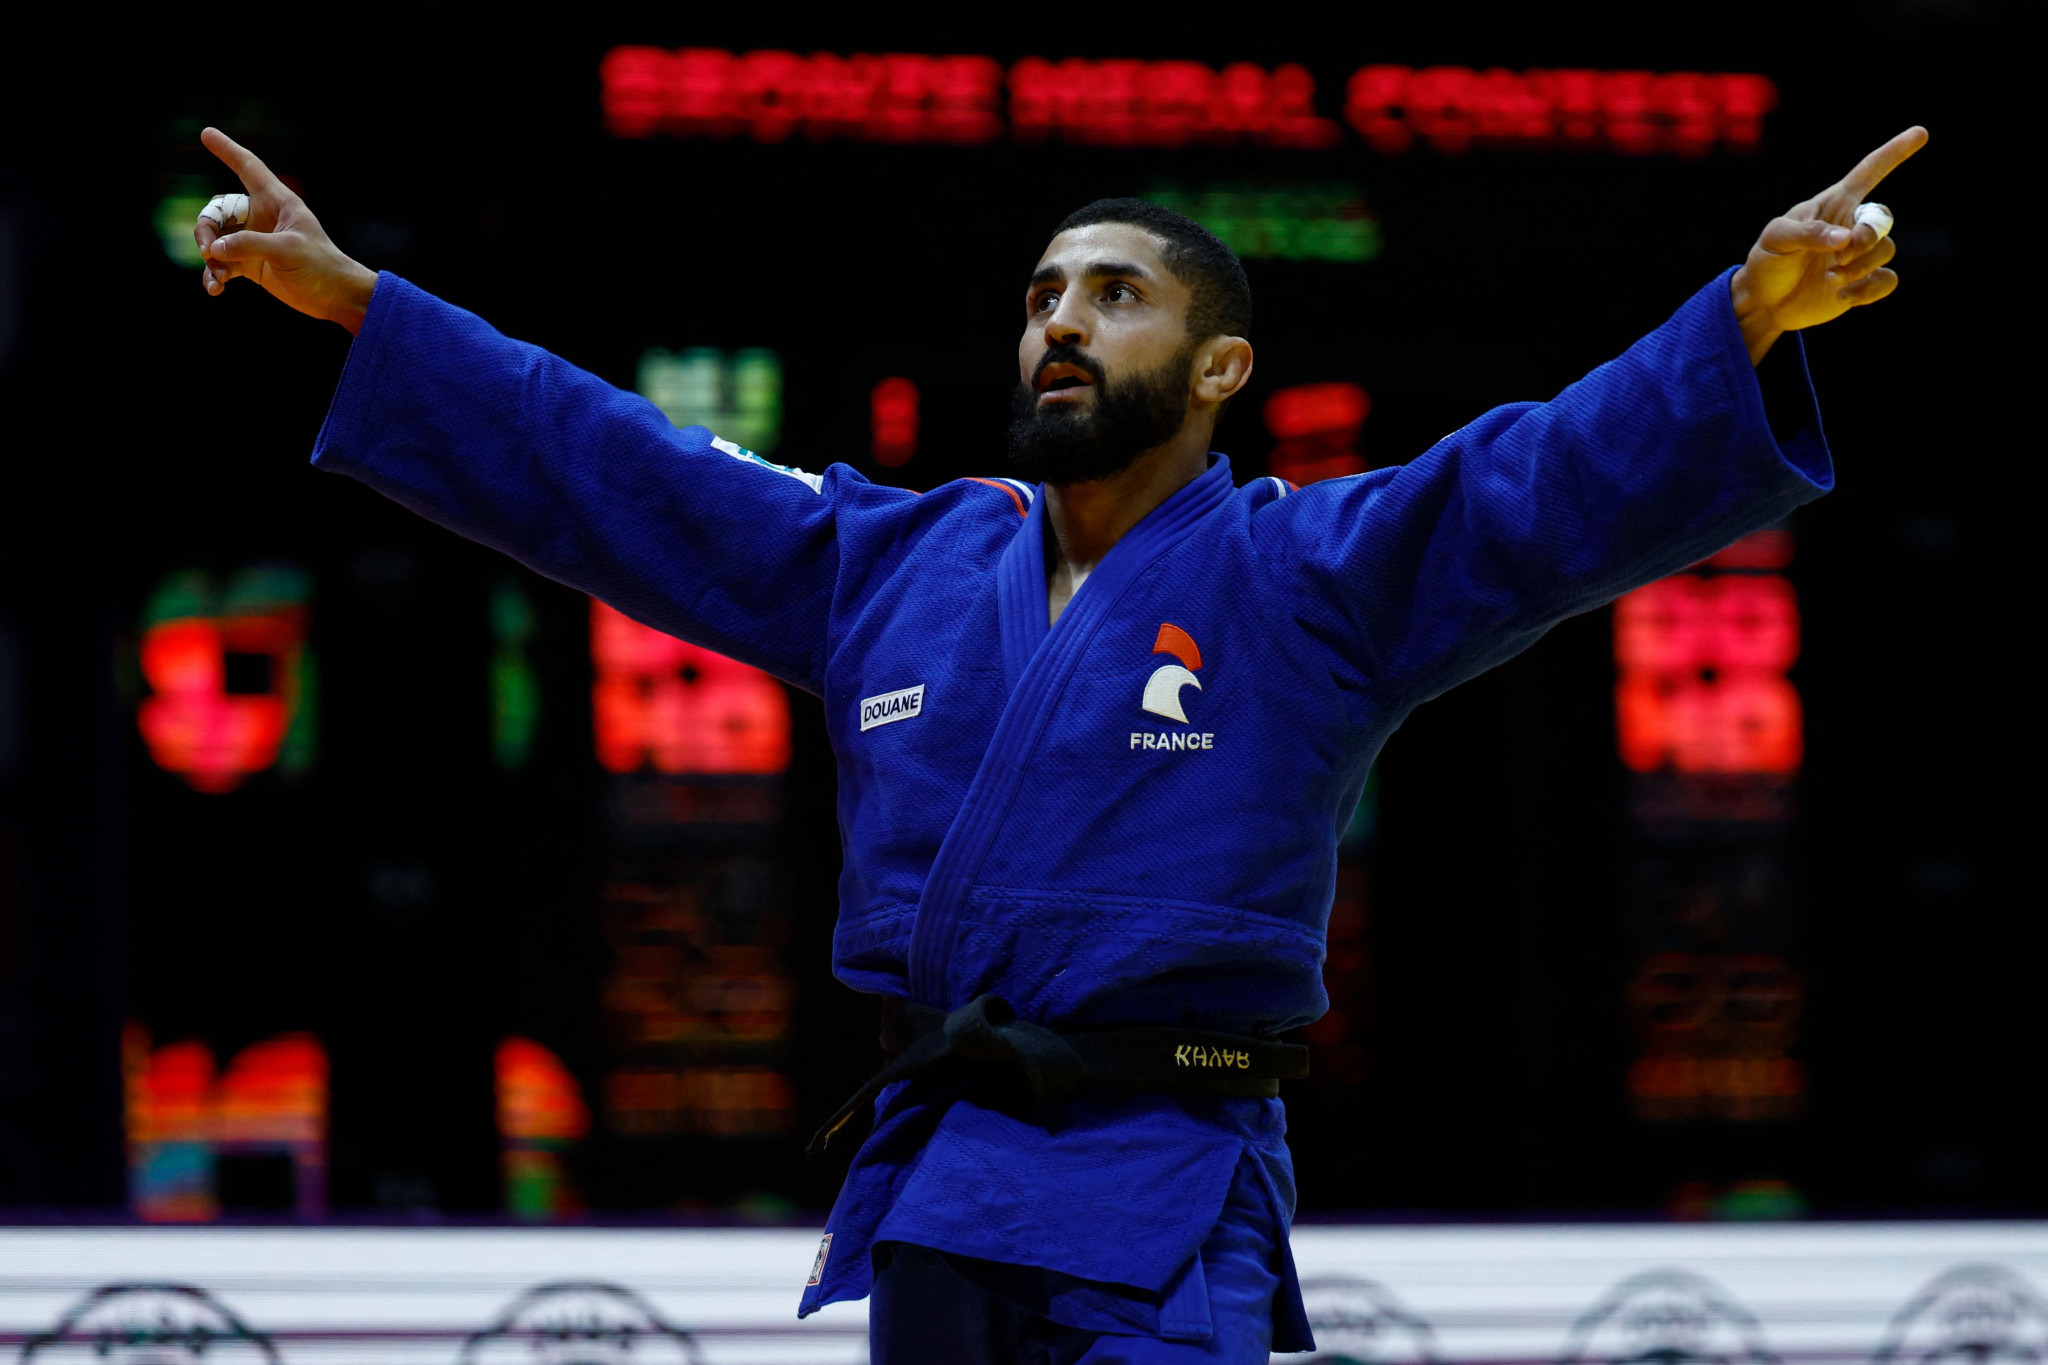 Frenchman Walide Khyar overcame South Korea's An Ba-ul to bag bronze ©Getty Images